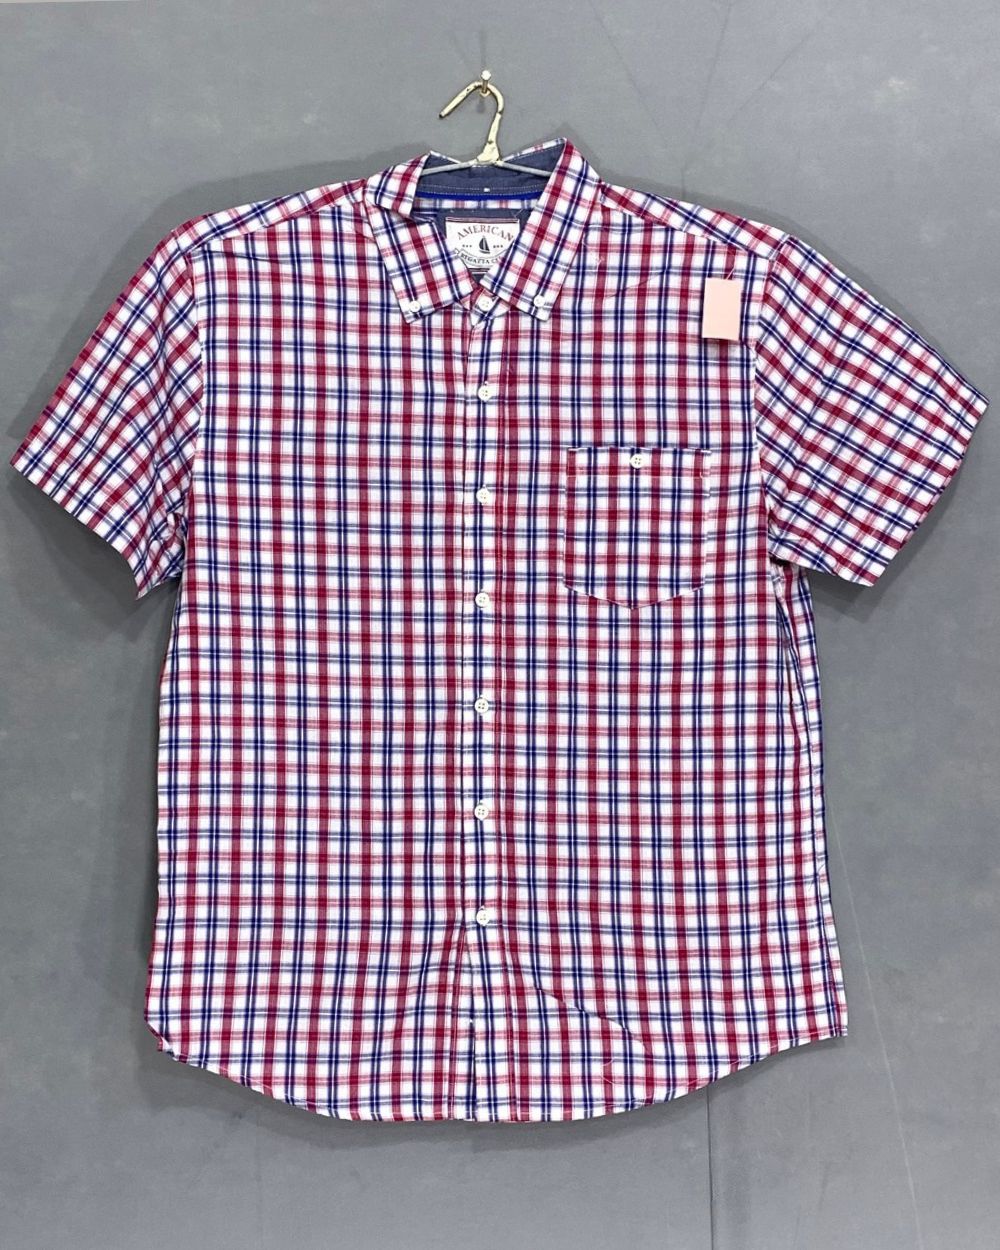 American Branded Original Cotton Shirt For Men